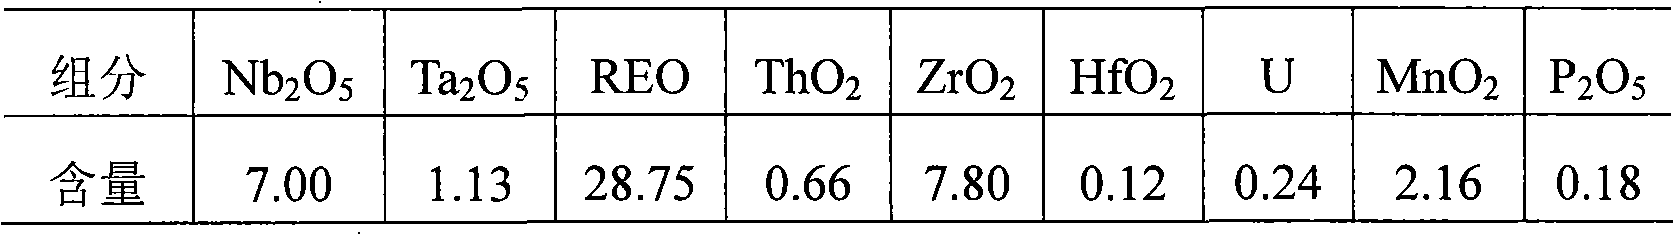 Method for decomposing ore concentrate containing tantalum, niobium and rare-earth element